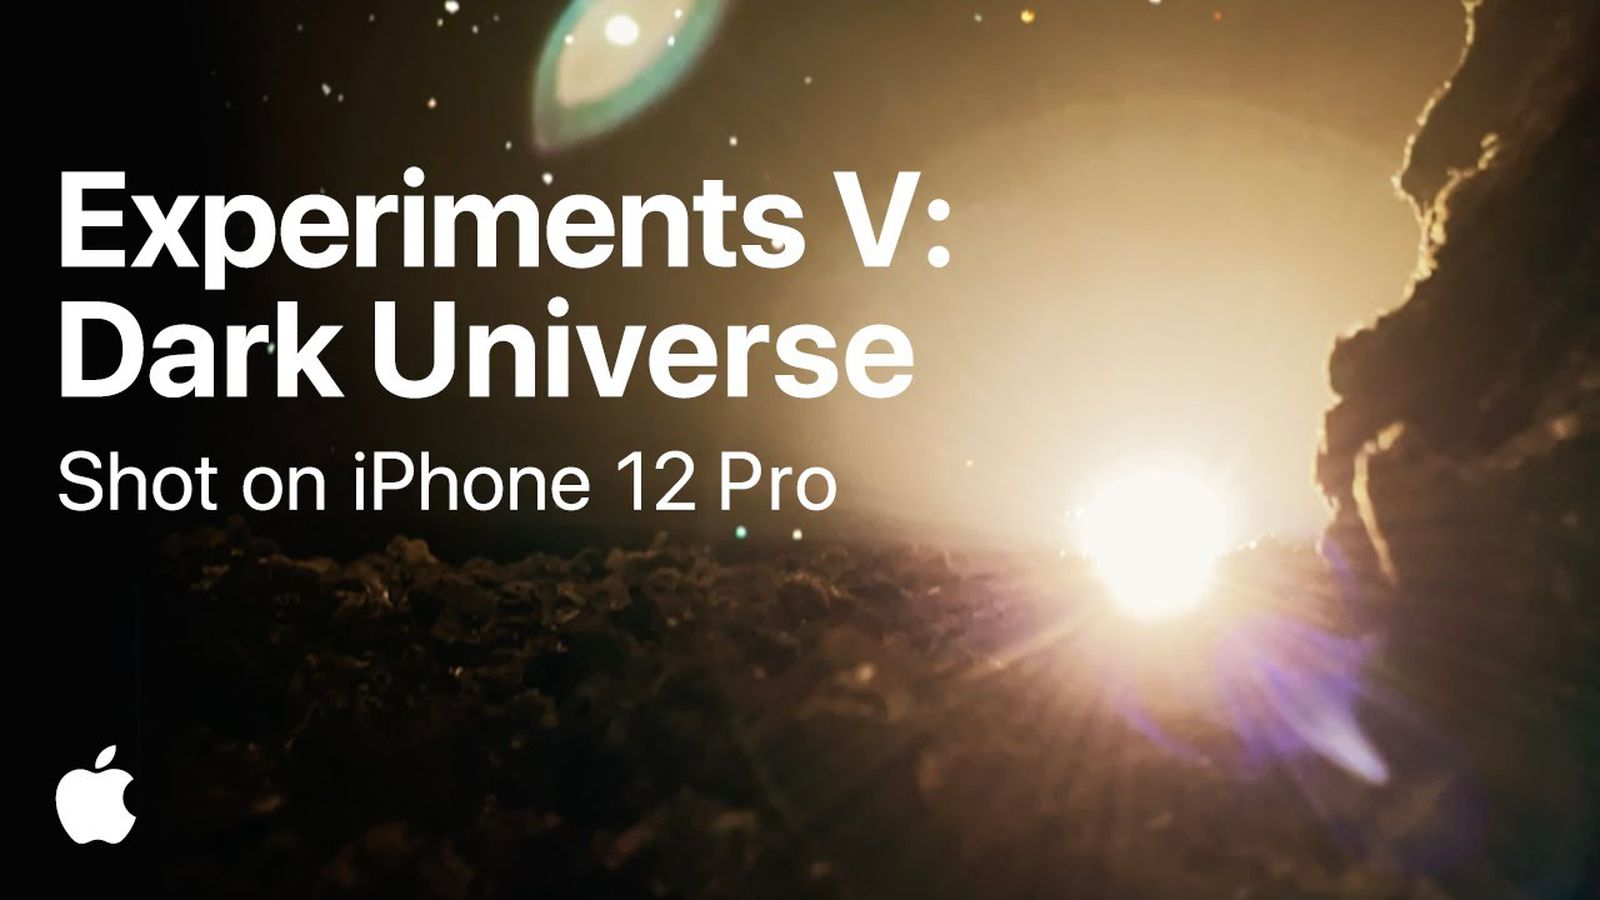 Apple Shares New 'Dark Universe' Experimental Video Shot on iPhone 12 Pro - MacRumors